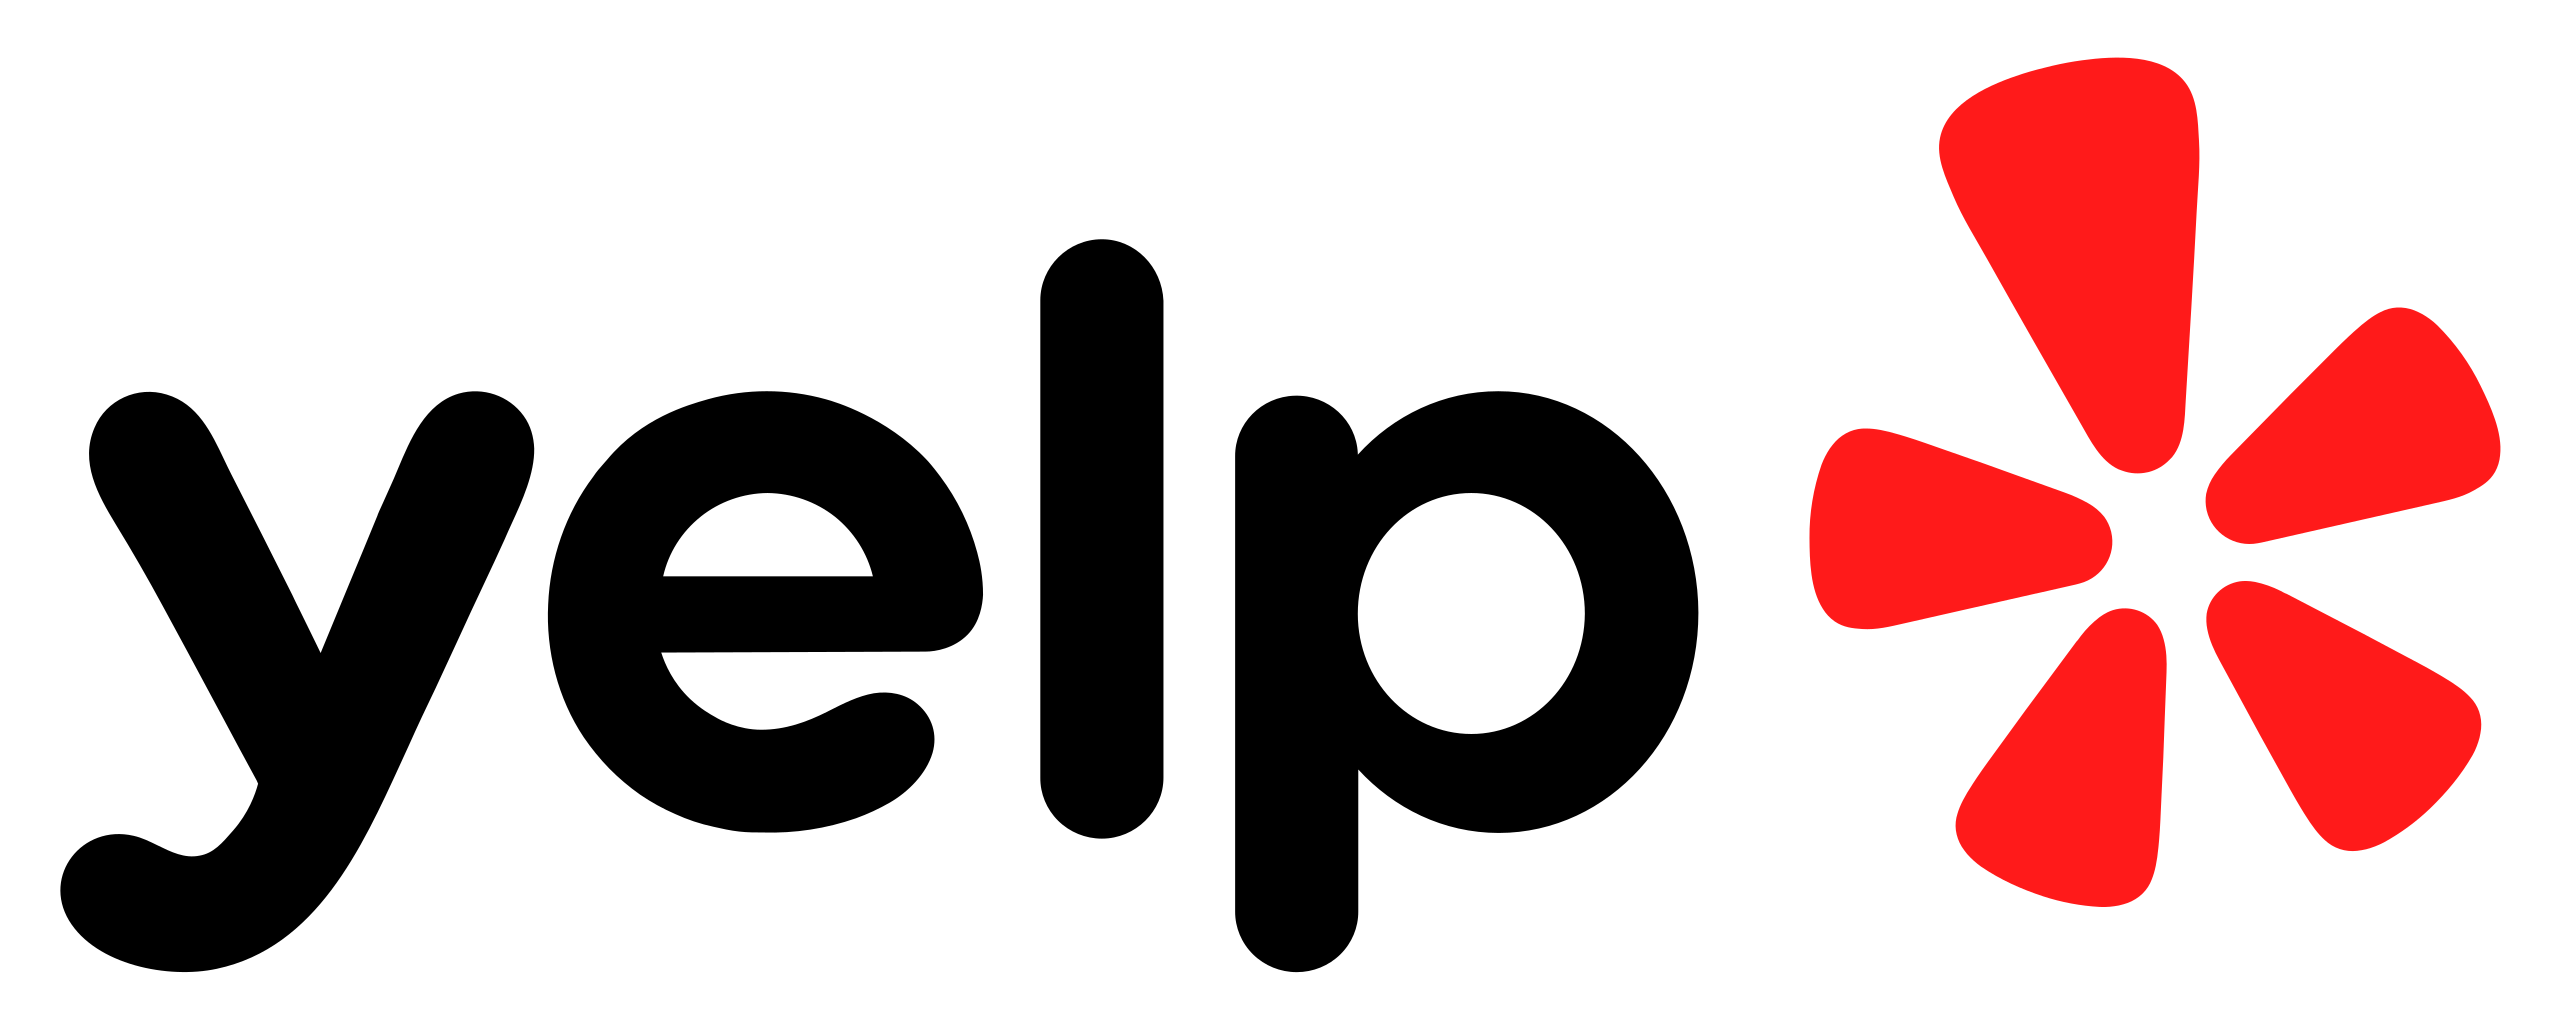 The logo for yelplex